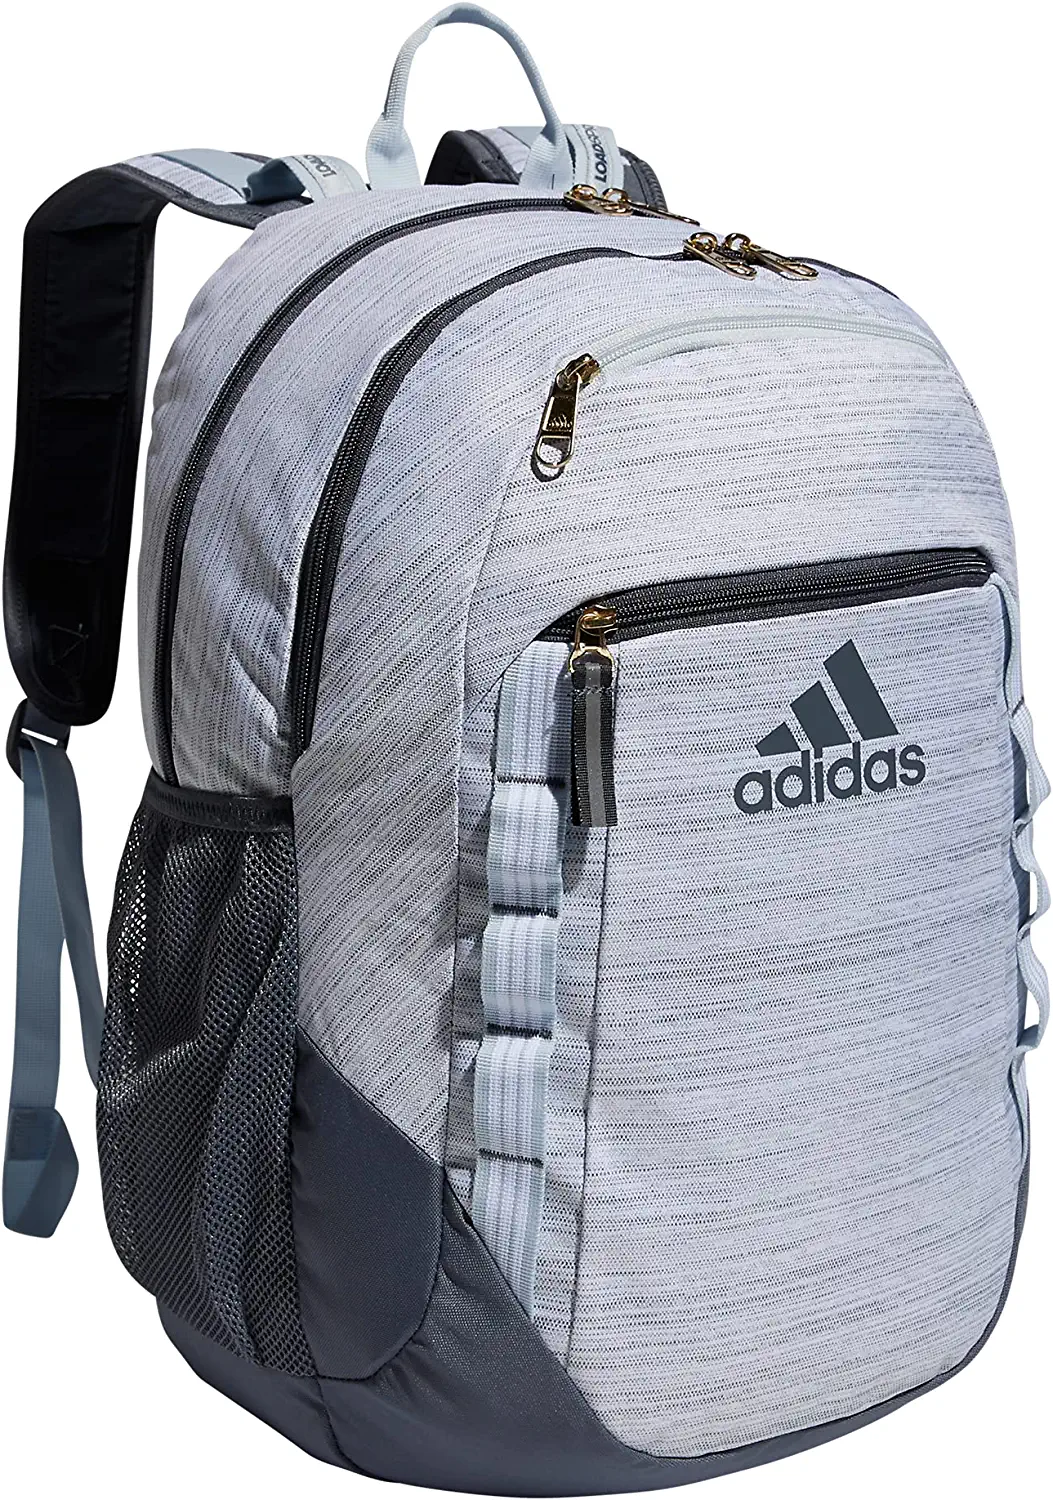 tranquilo cola planes adidas Load-Spring Shoulder Straps Organizational College Backpack